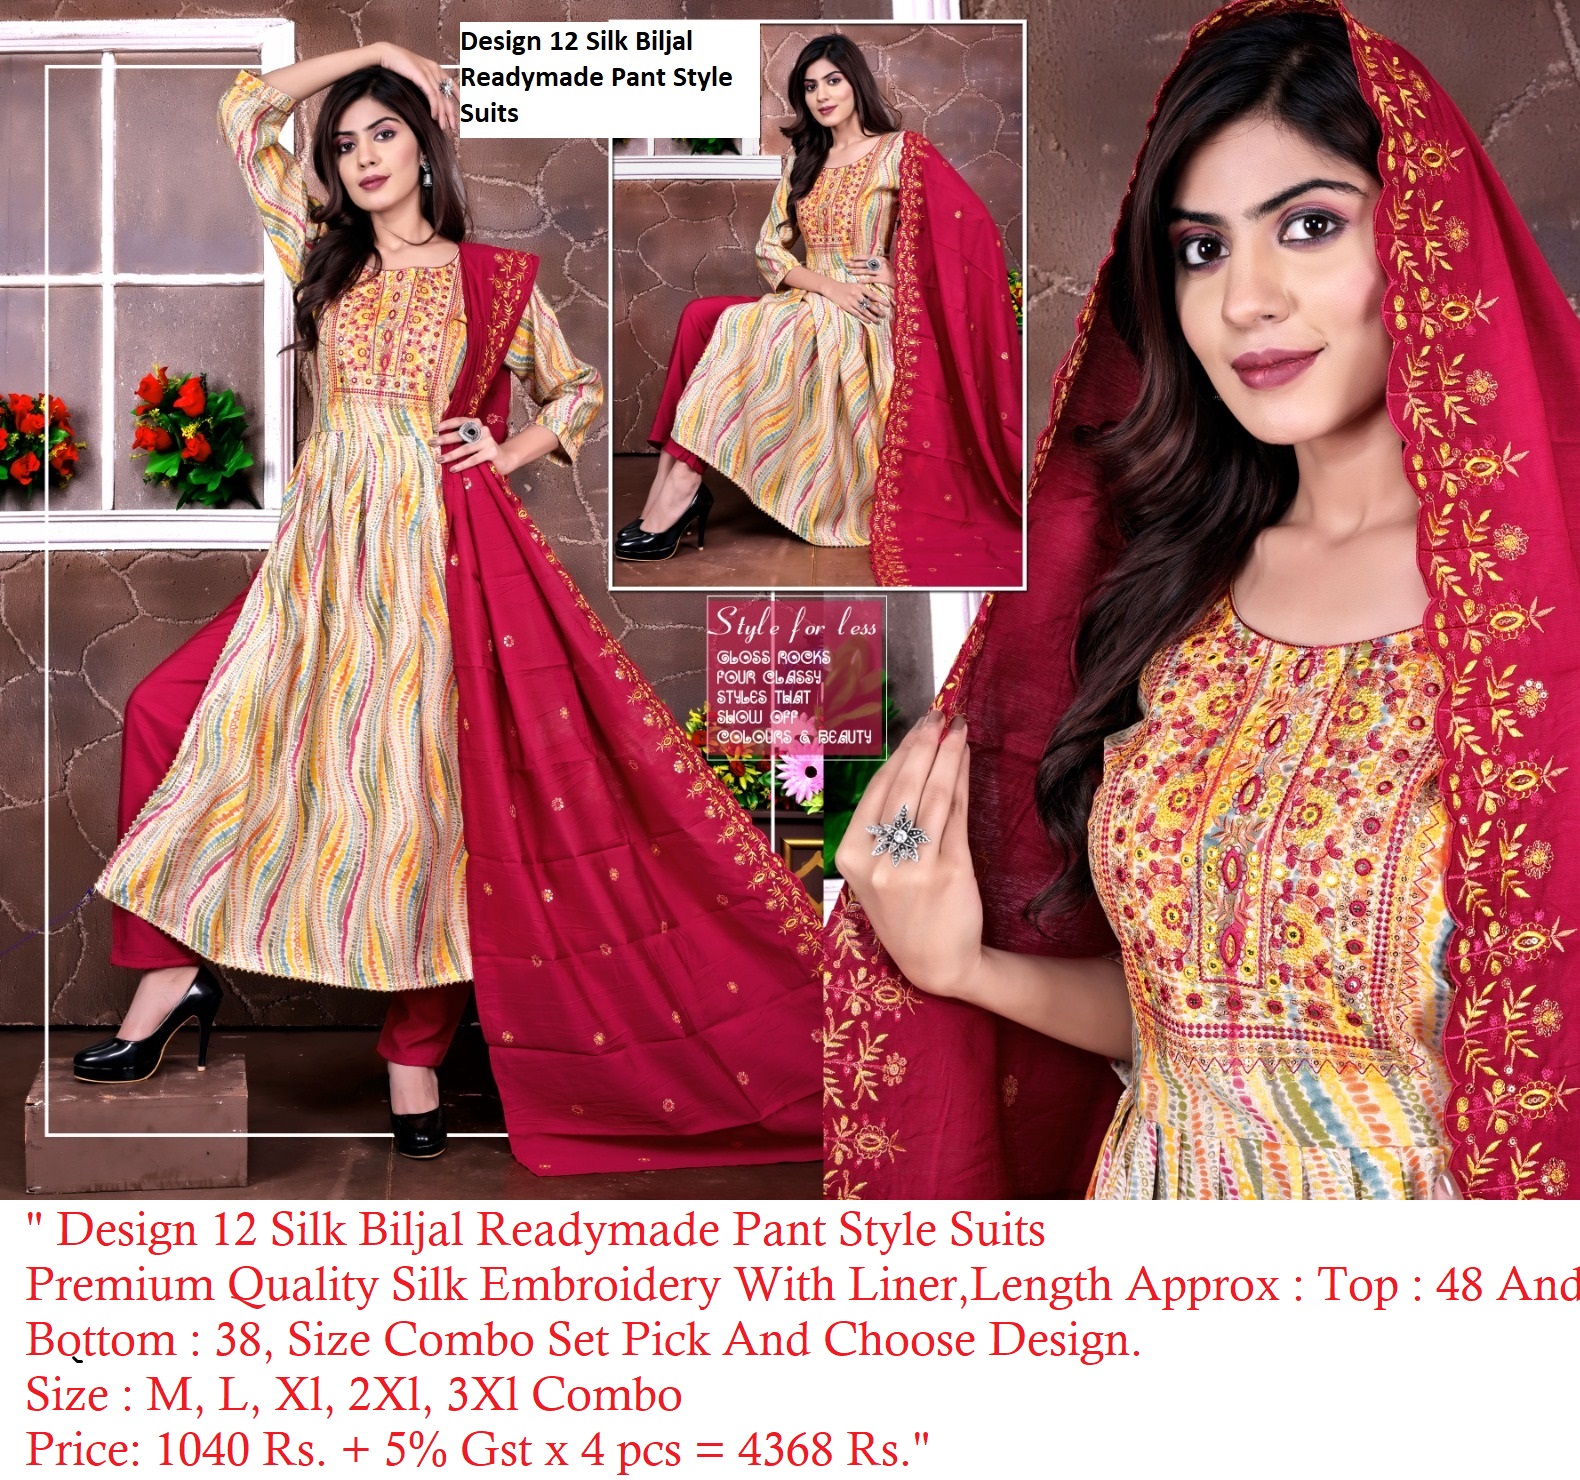 Biljal Design 12 Silk Readymade Pant Style Dress Catalog Lowest Price